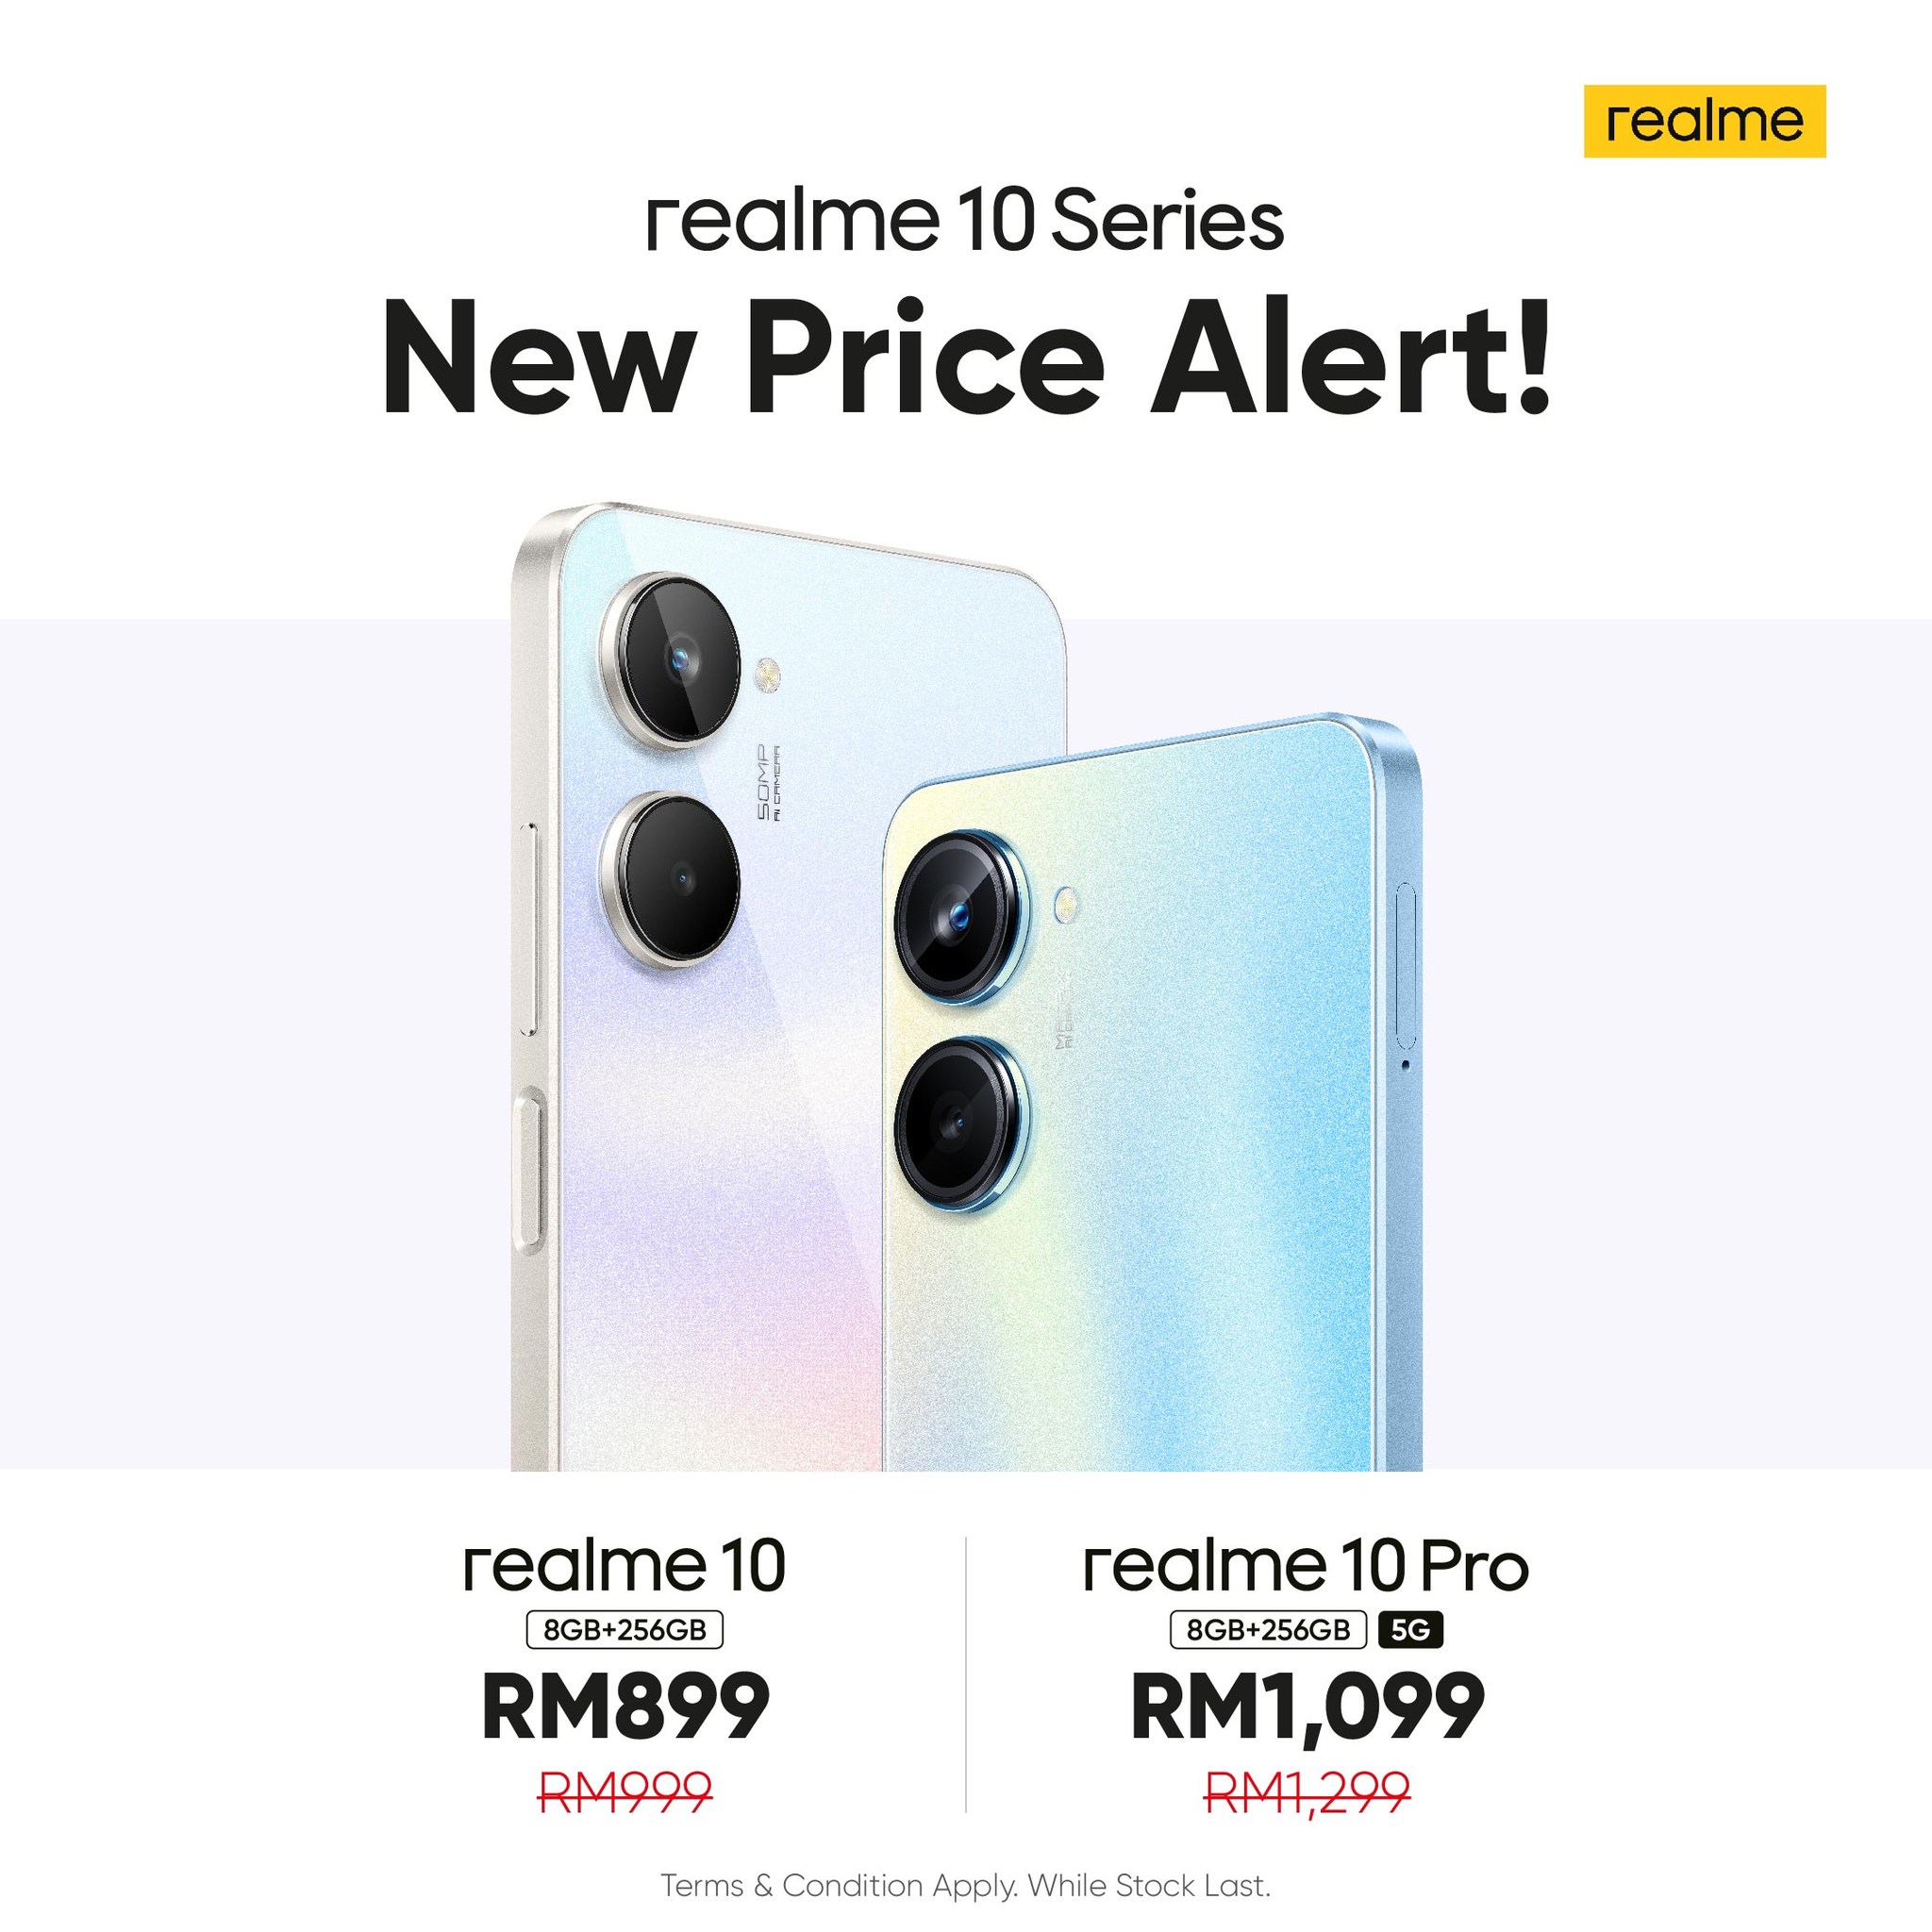 realme 10 Series New Price Alert